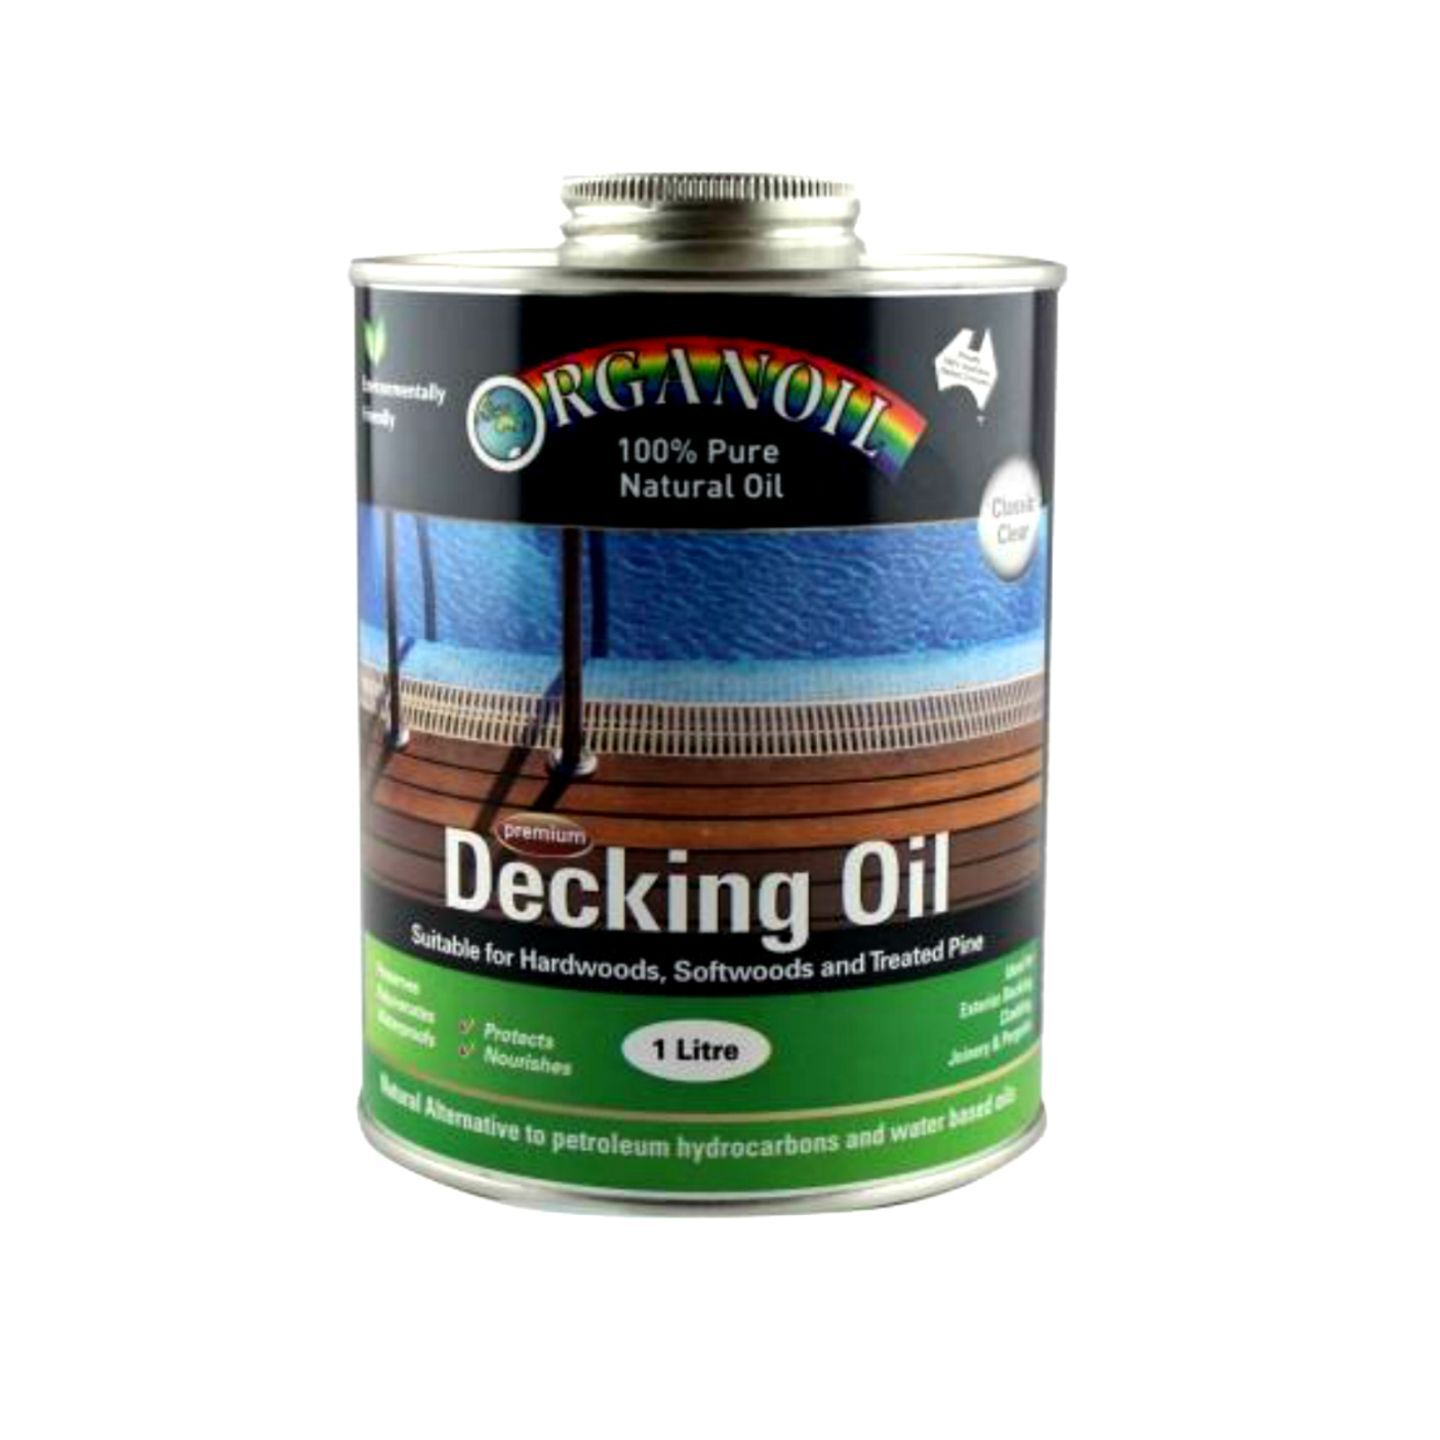 Organoil Decking Oil (Classic Clear) - 1 Litre